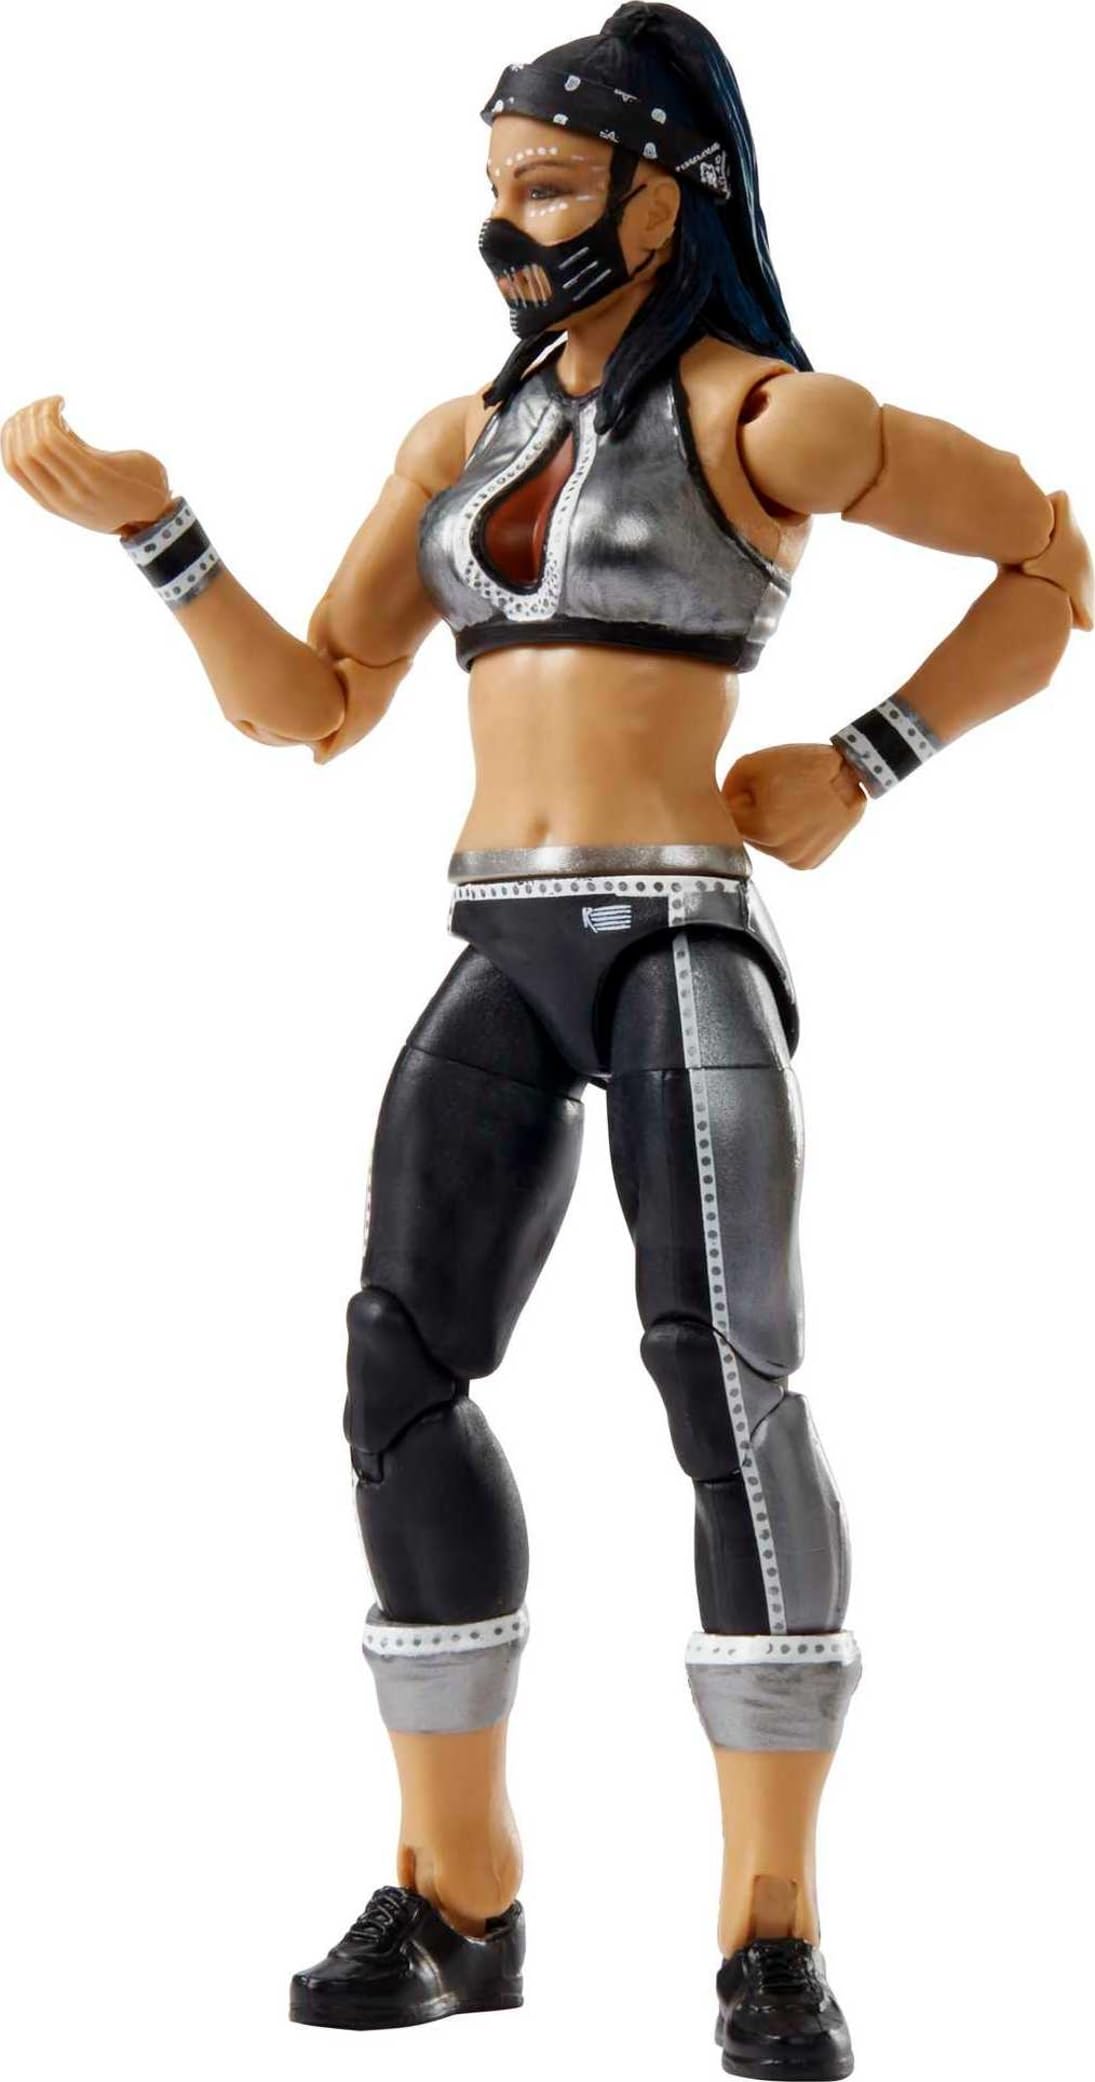 Mattel Reckoning Elite Collection Action Figure, Series # 90